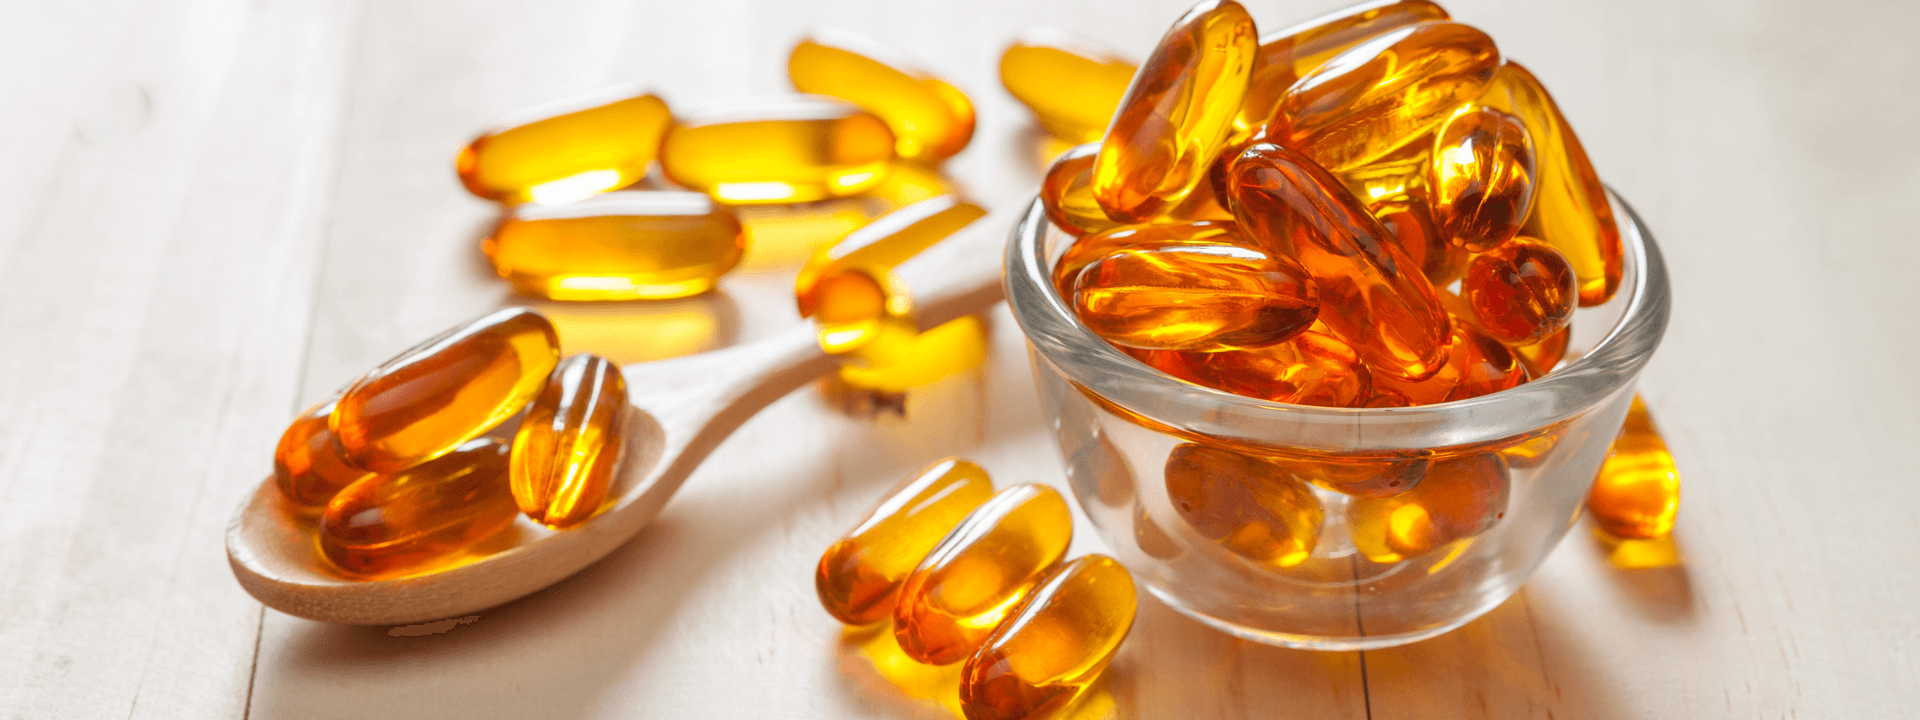 Does Fish Oil deplete Vitamin E levels?